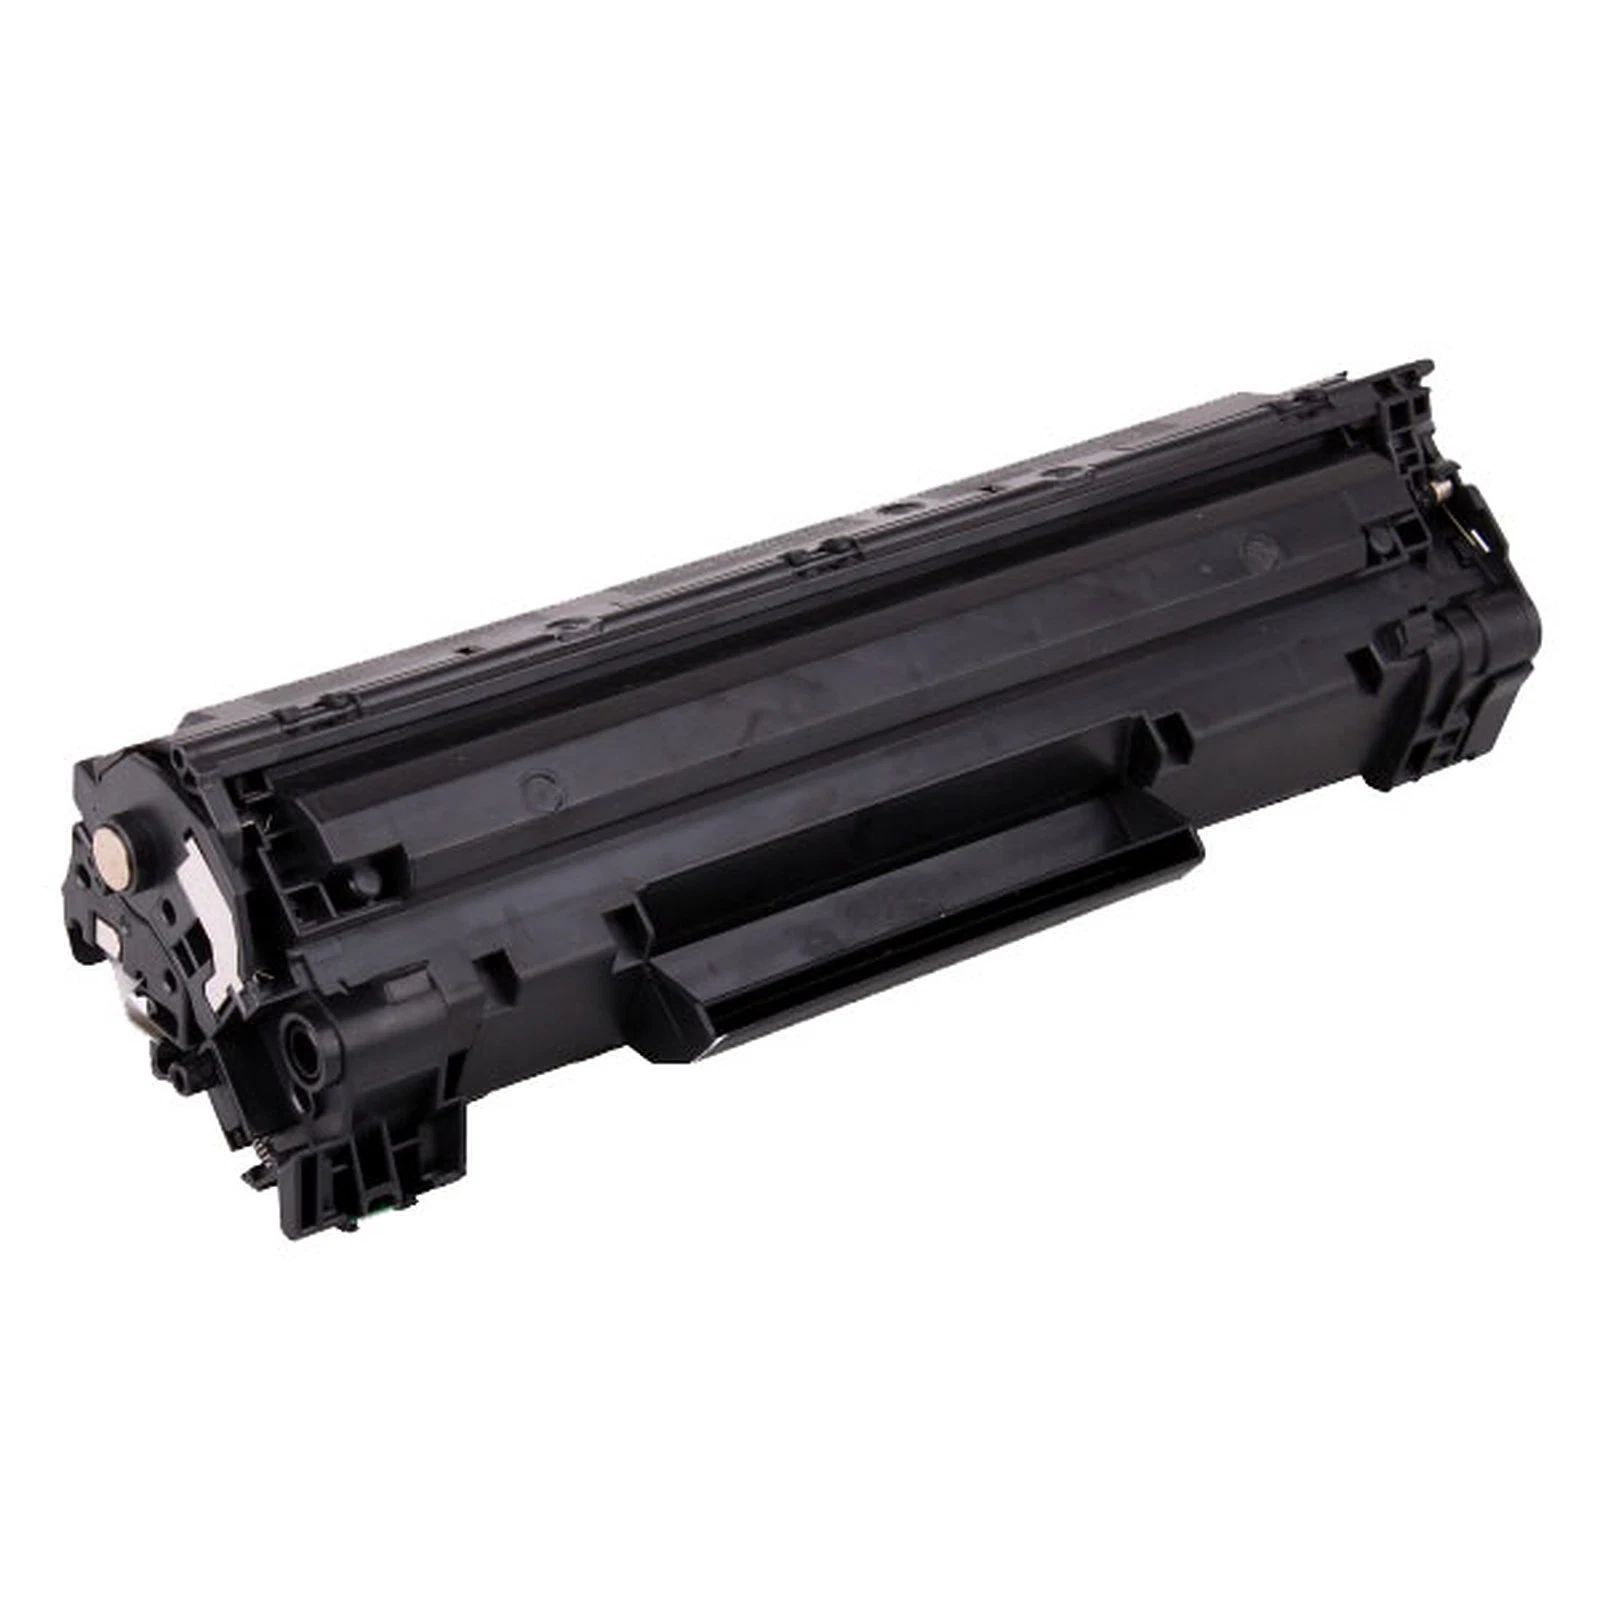 A HP CF283A/Crg737 do cartucho de toner compatível para Impressora Laserjet Pro M125/M127/M201/M225